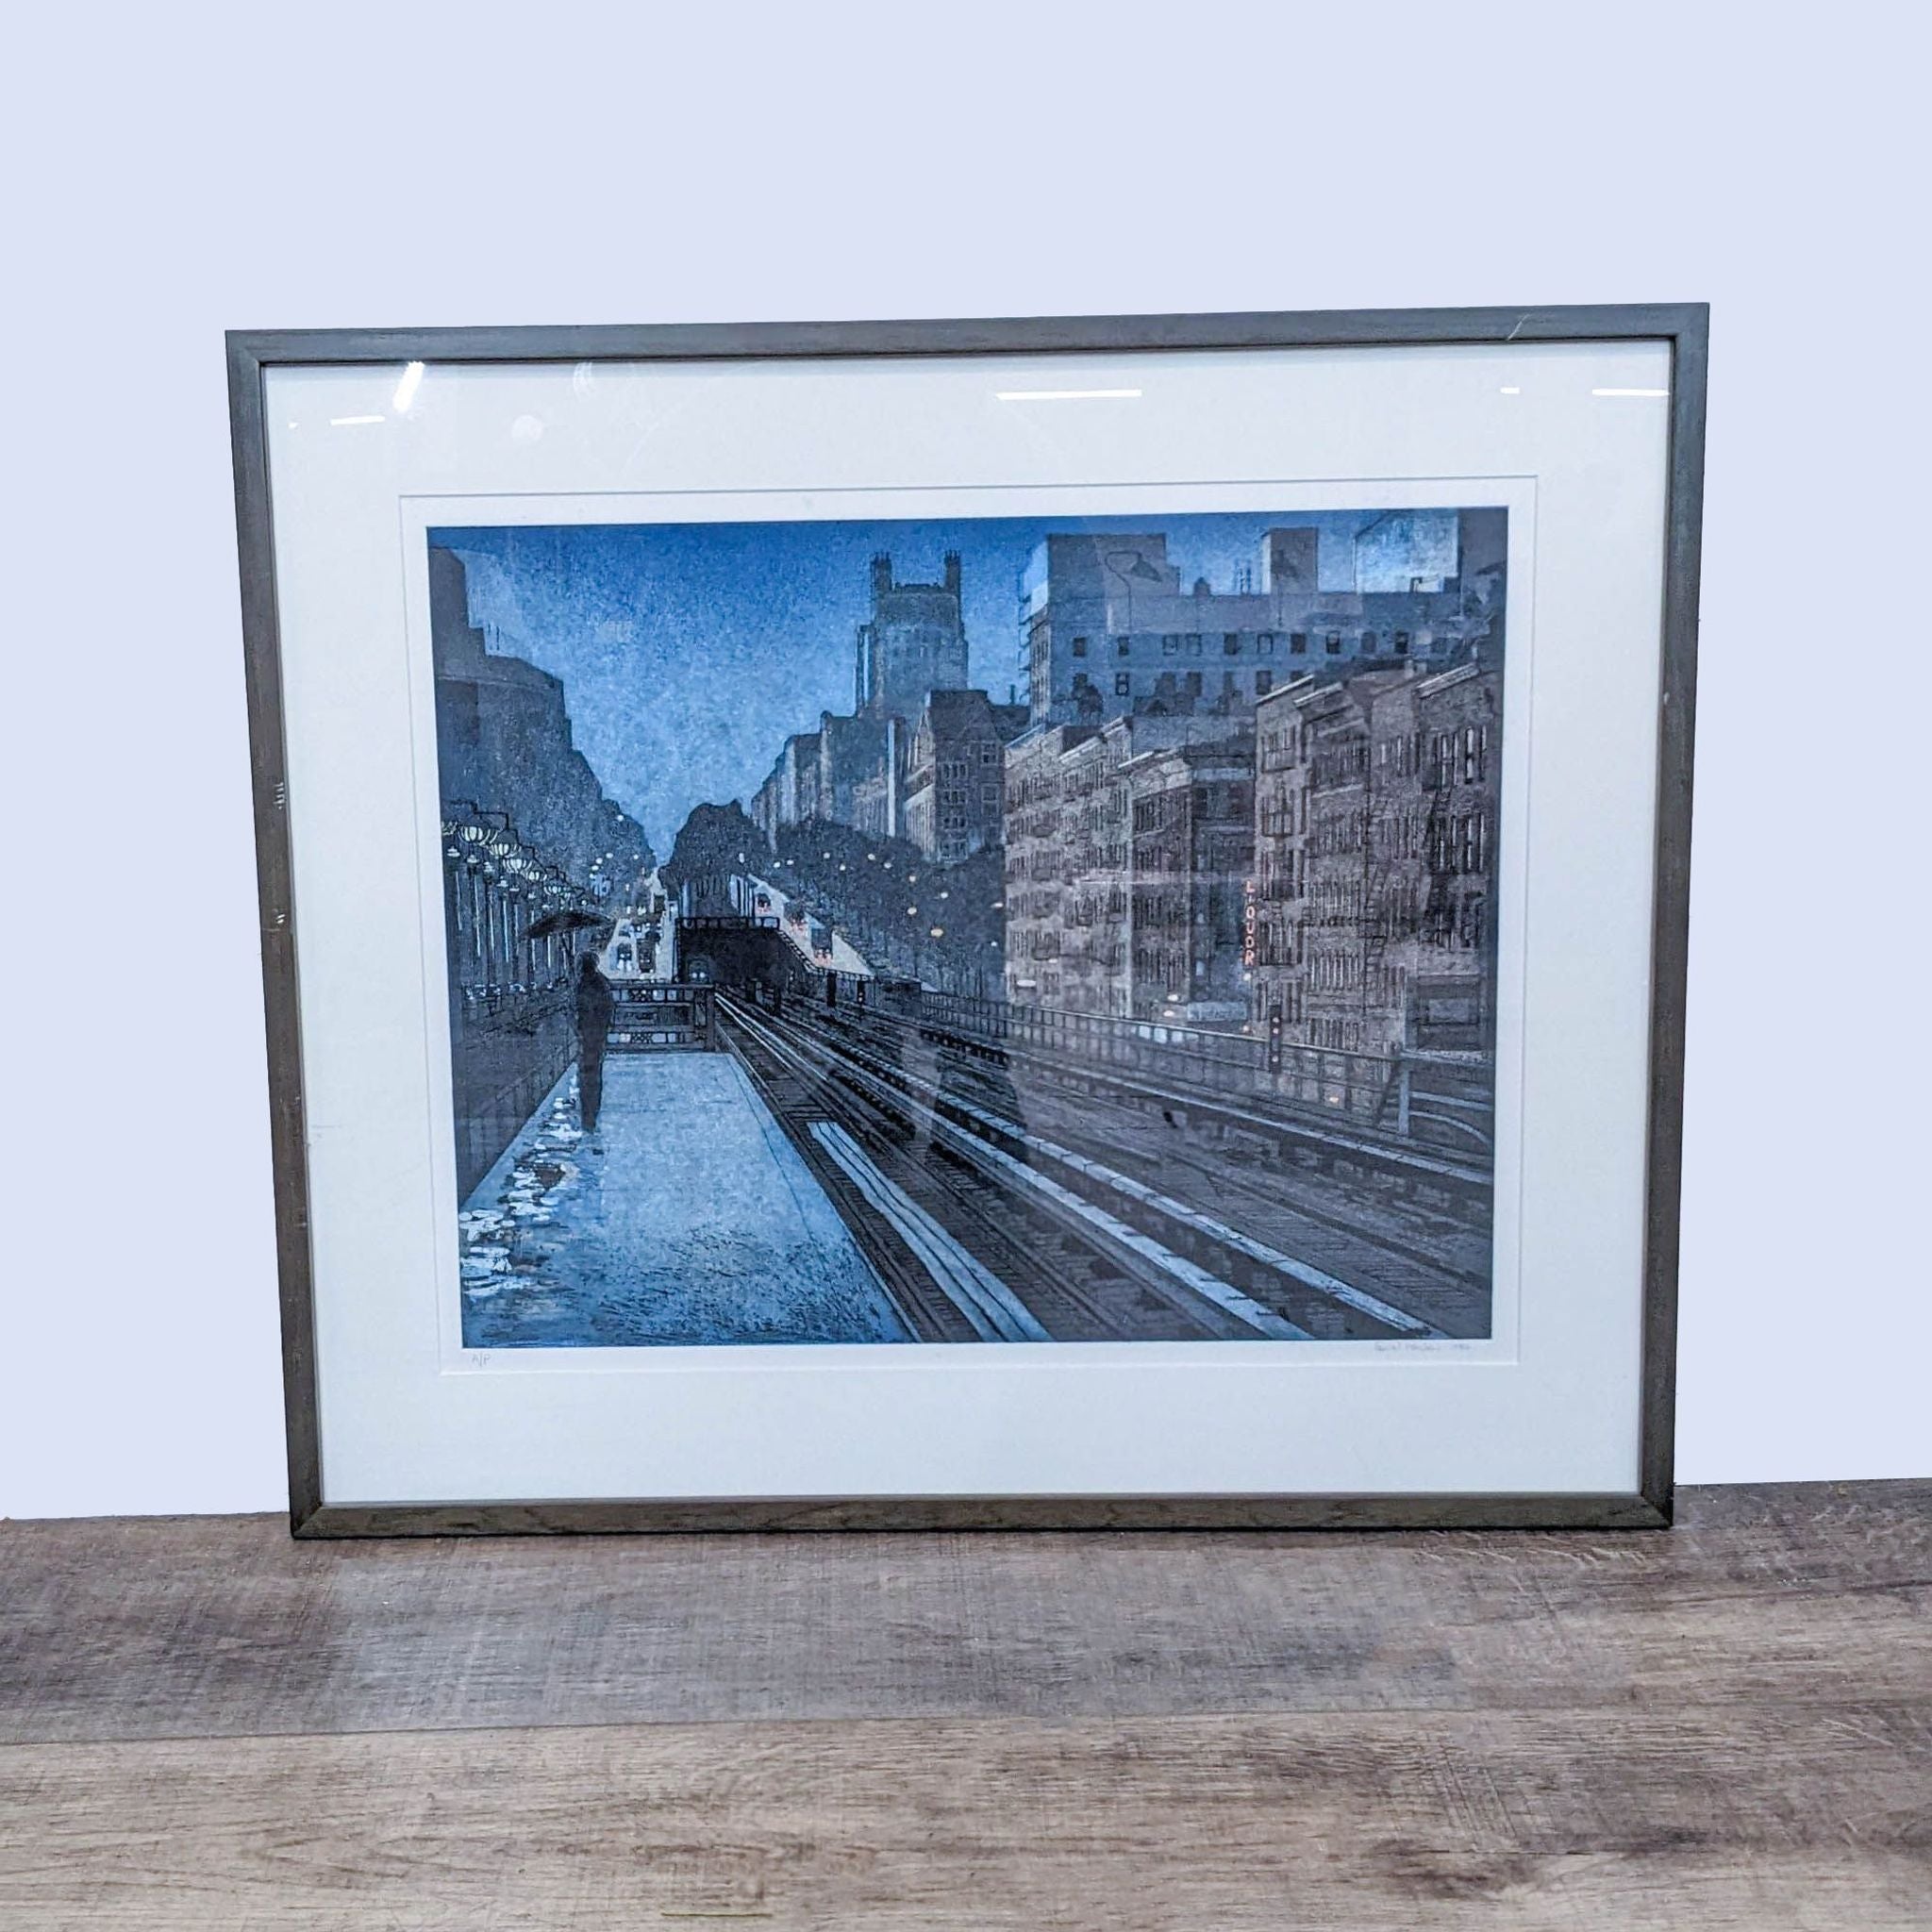 Framed print "Evening Rain" depicting a rain-slicked subway platform at twilight, signed by Daniel Hauben.